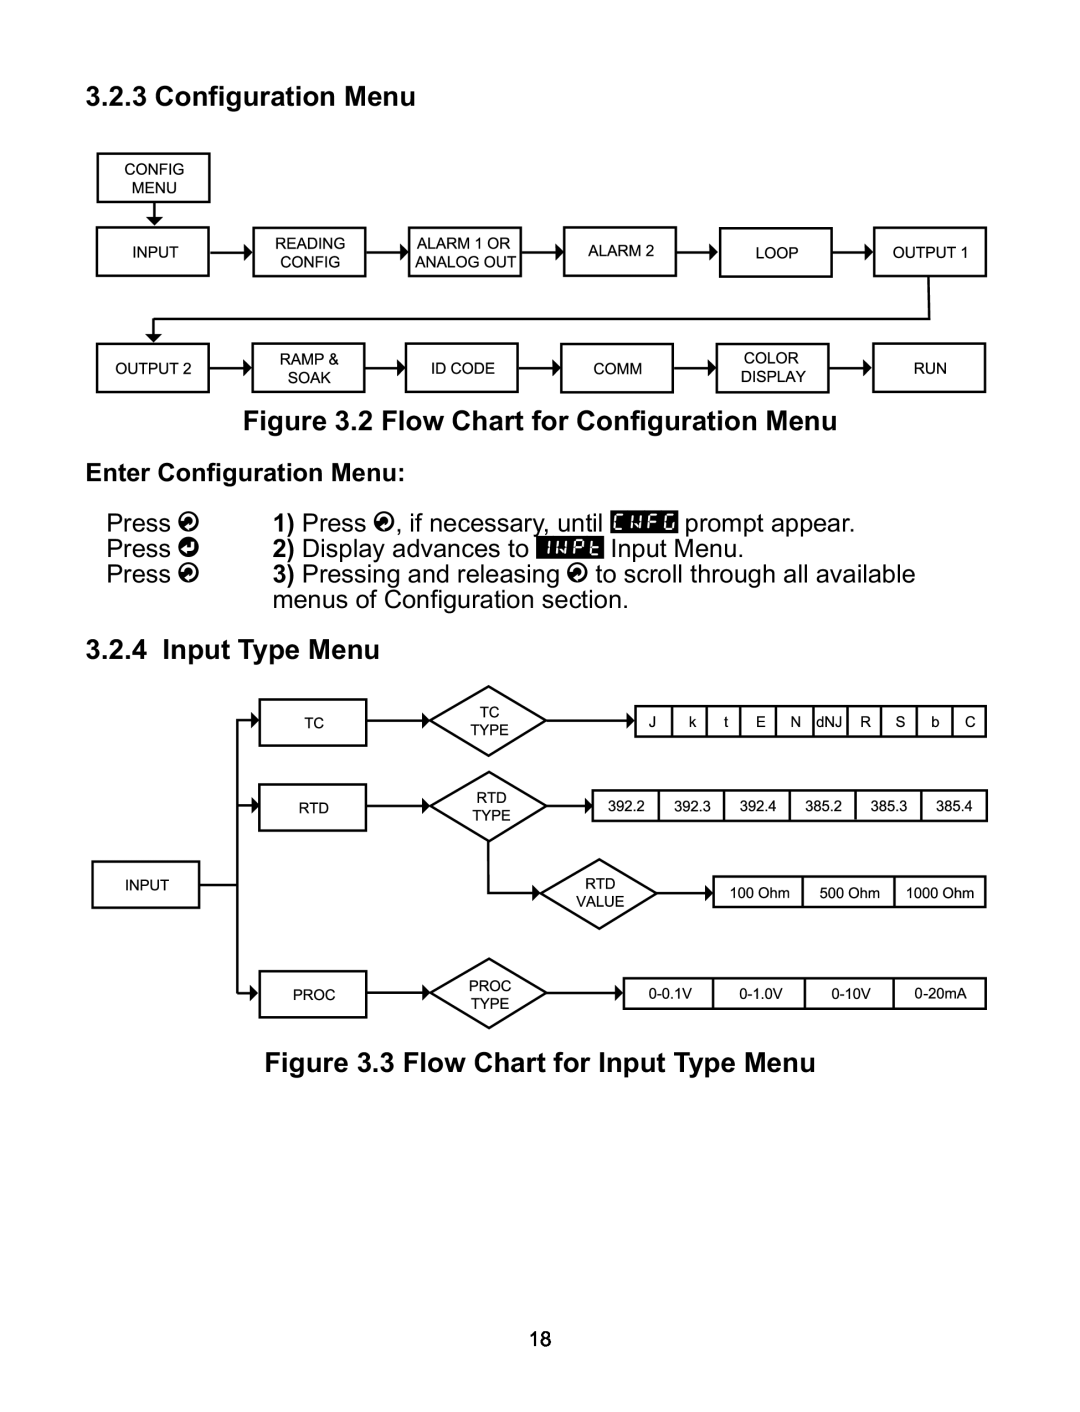 Omega CNI8 Configuration Menu .2 Flow Chart for Configuration Menu, Input Type Menu .3 Flow Chart for Input Type Menu 